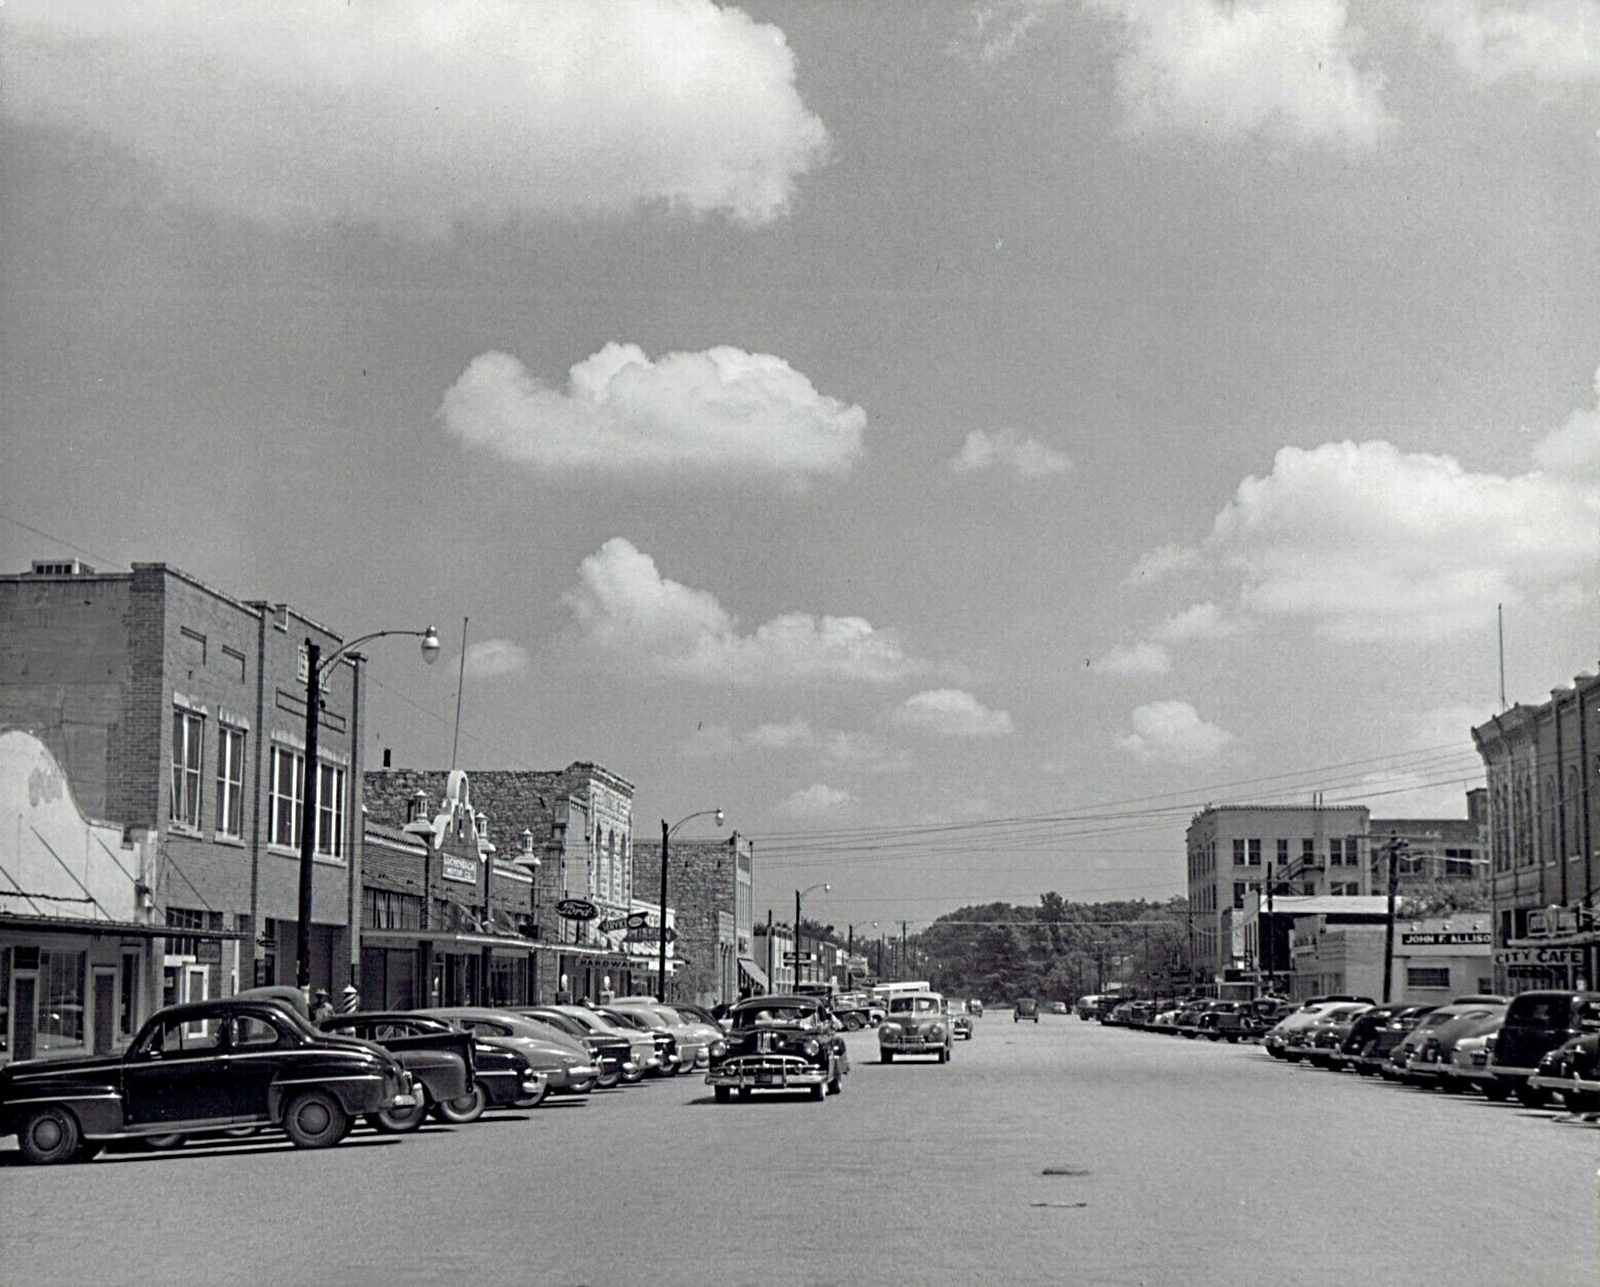 Downtown Menard in 1950